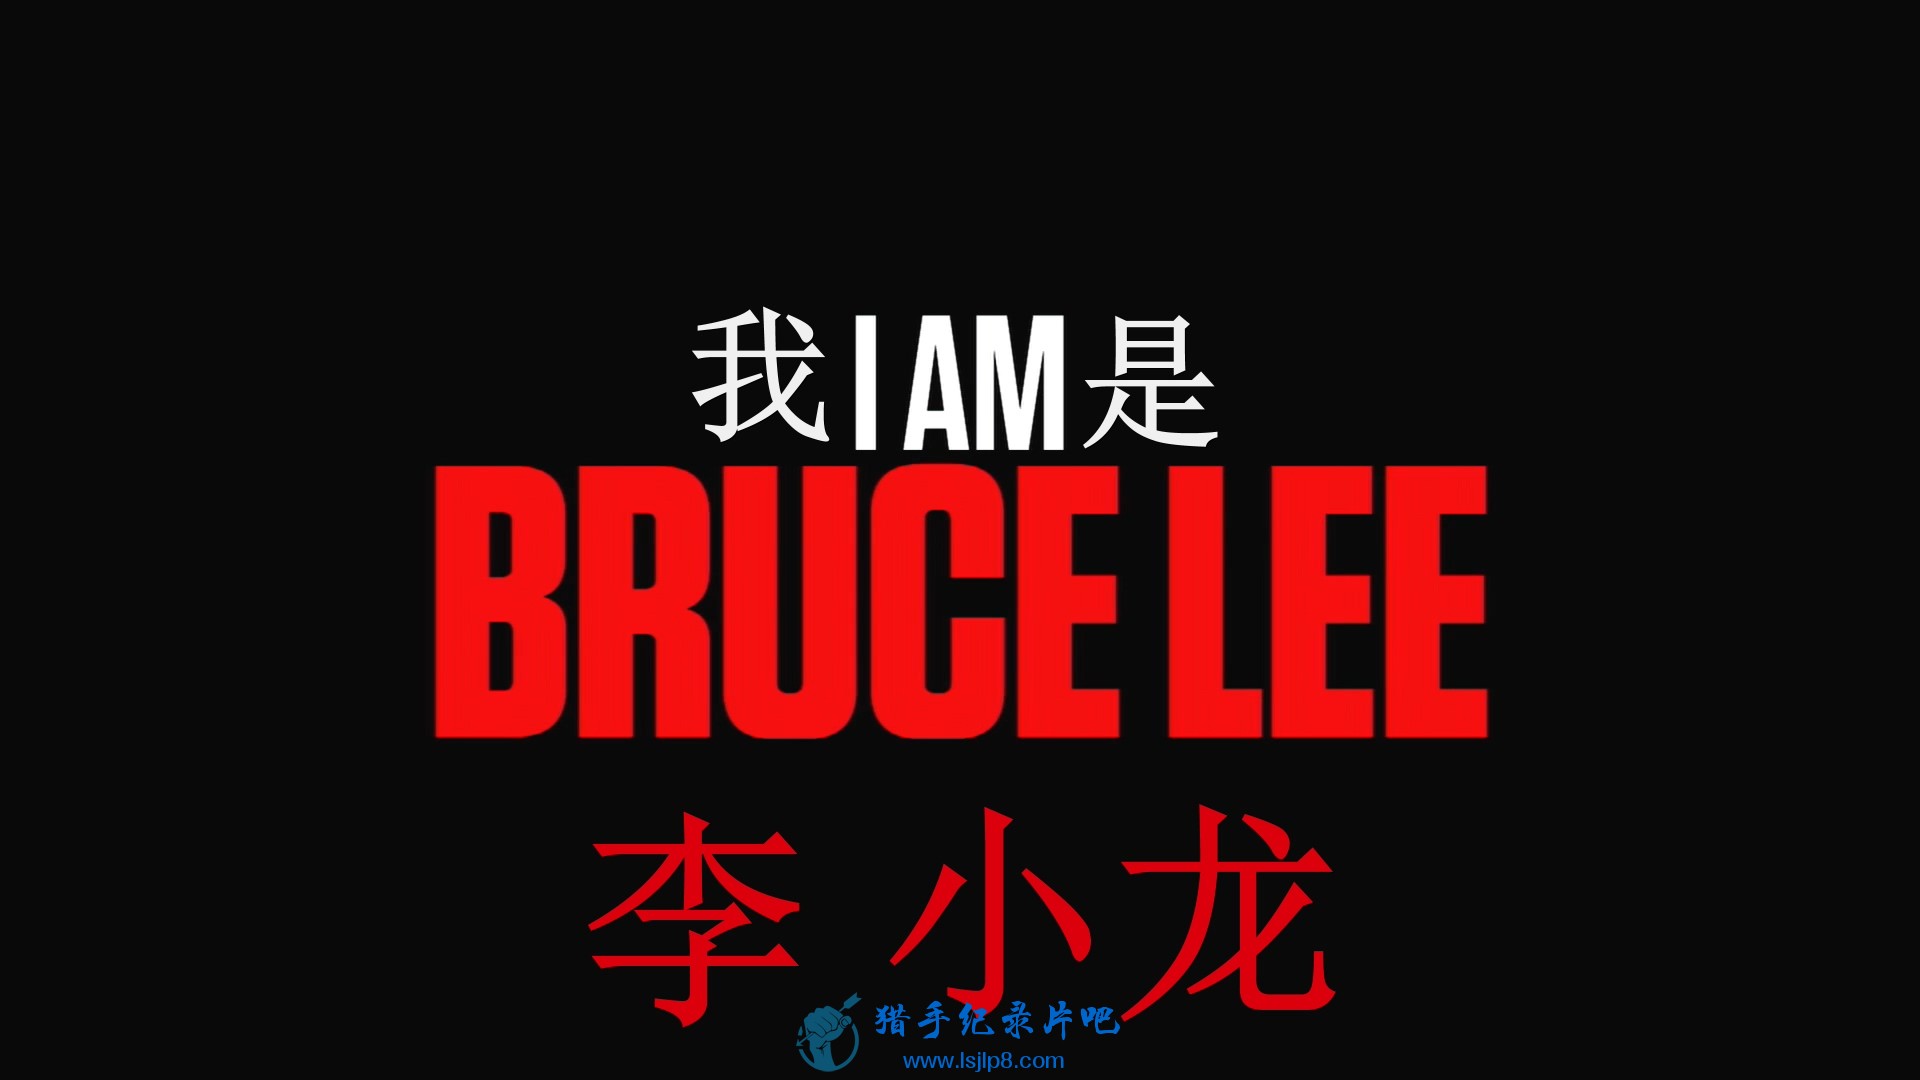 I.Am.Bruce.Lee.2011.1080p.BluRay.x264-GECKOS.mkv_20211230_150549.123.jpg